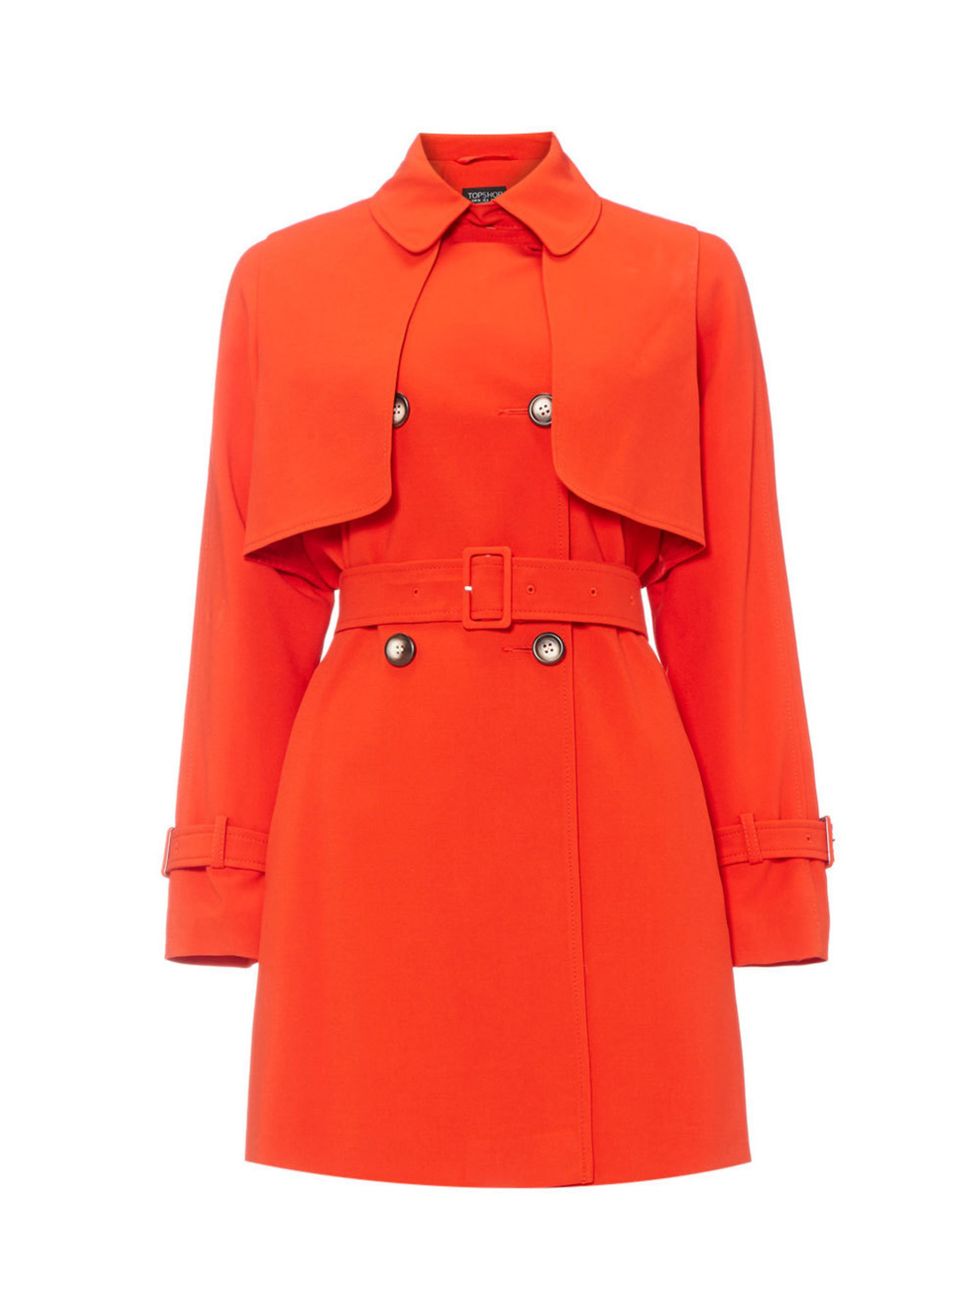 Coat, Collar, Sleeve, Textile, Red, Outerwear, Orange, Formal wear, Dress shirt, Uniform, 